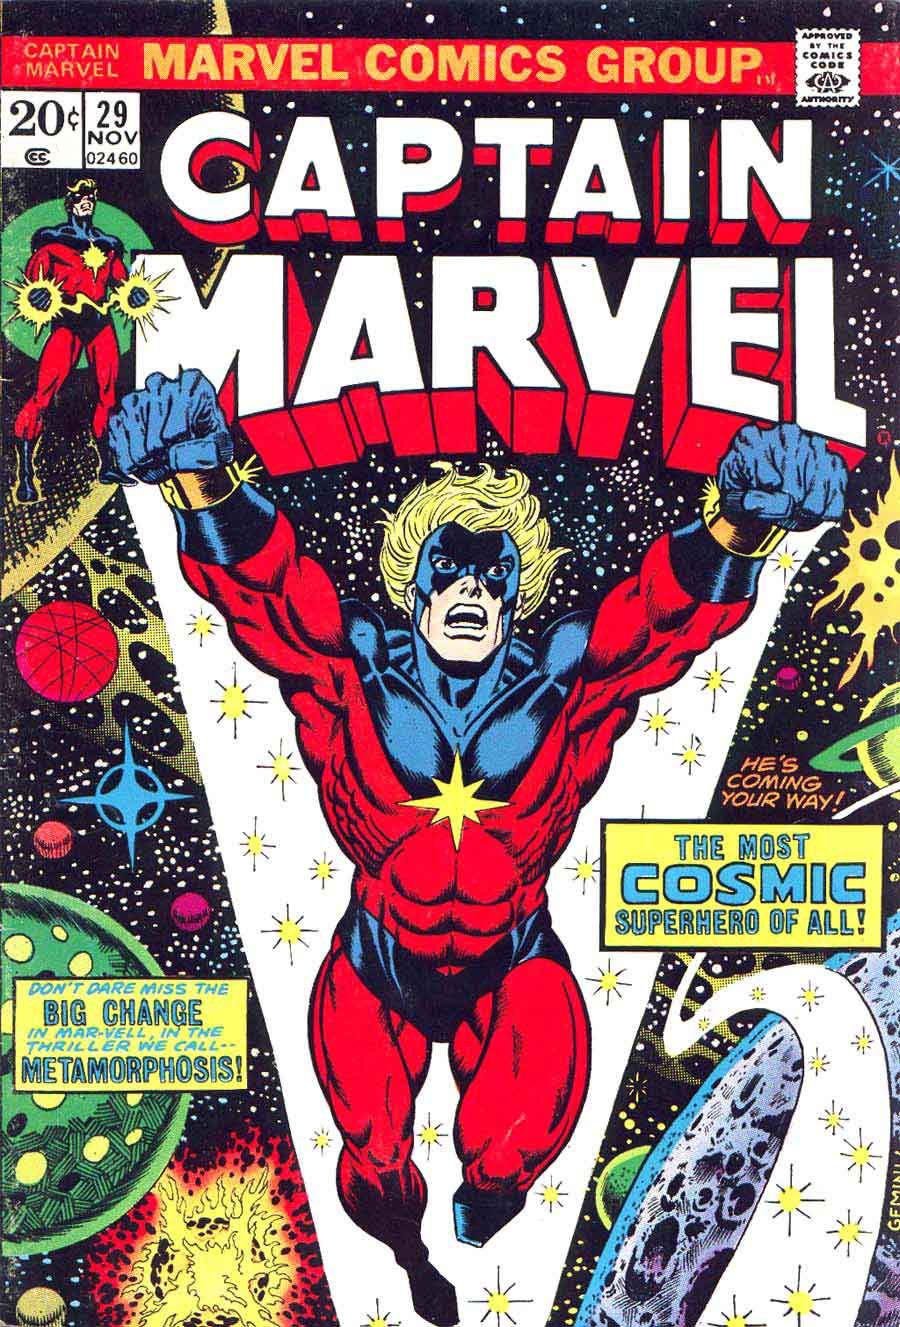 Captain Marvel #29 marvel 1970s bronze age comic book cover art by Jim Starlin